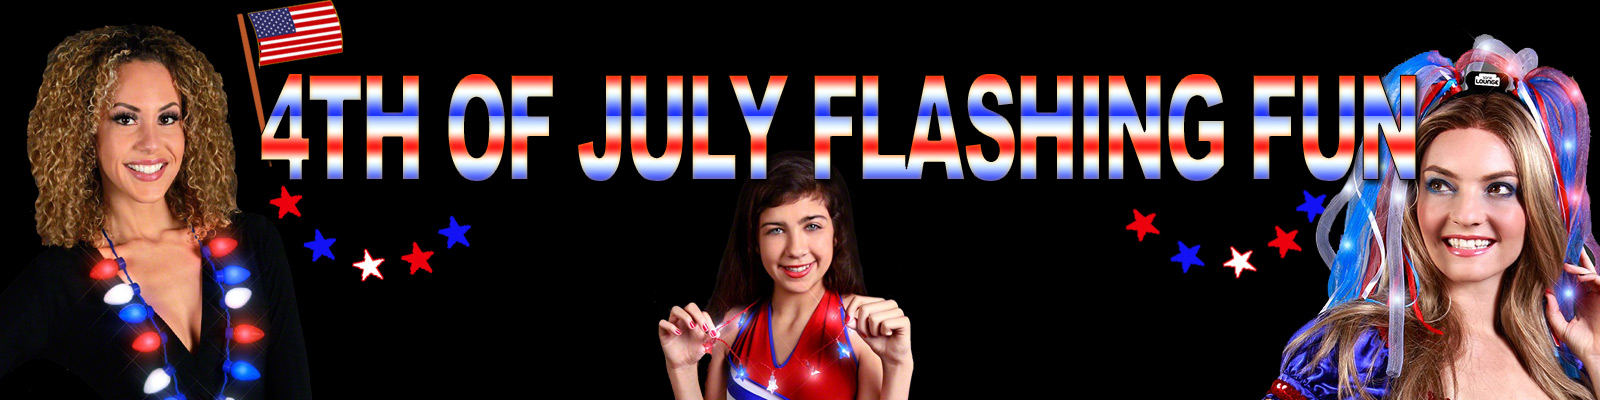 4th Of July Flashing Fun! Shop Now!